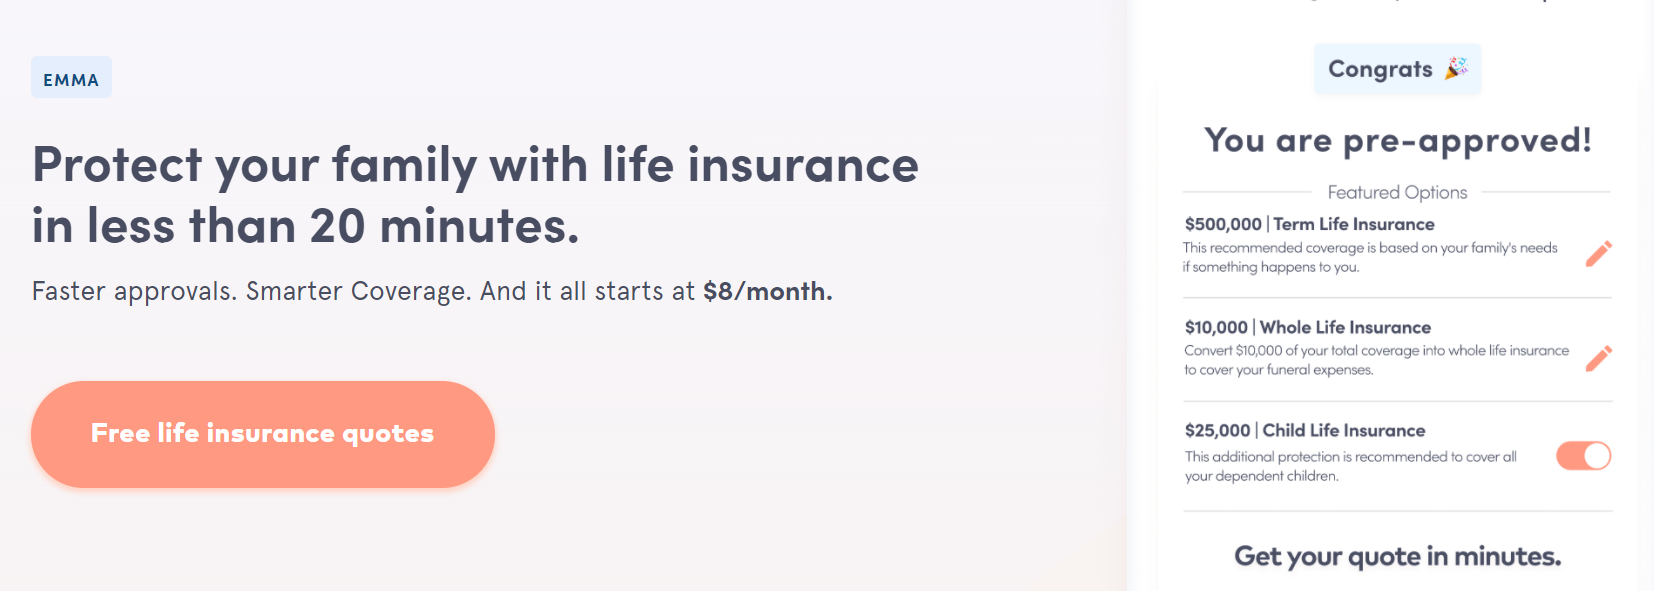 Emma Life Insurance referral program